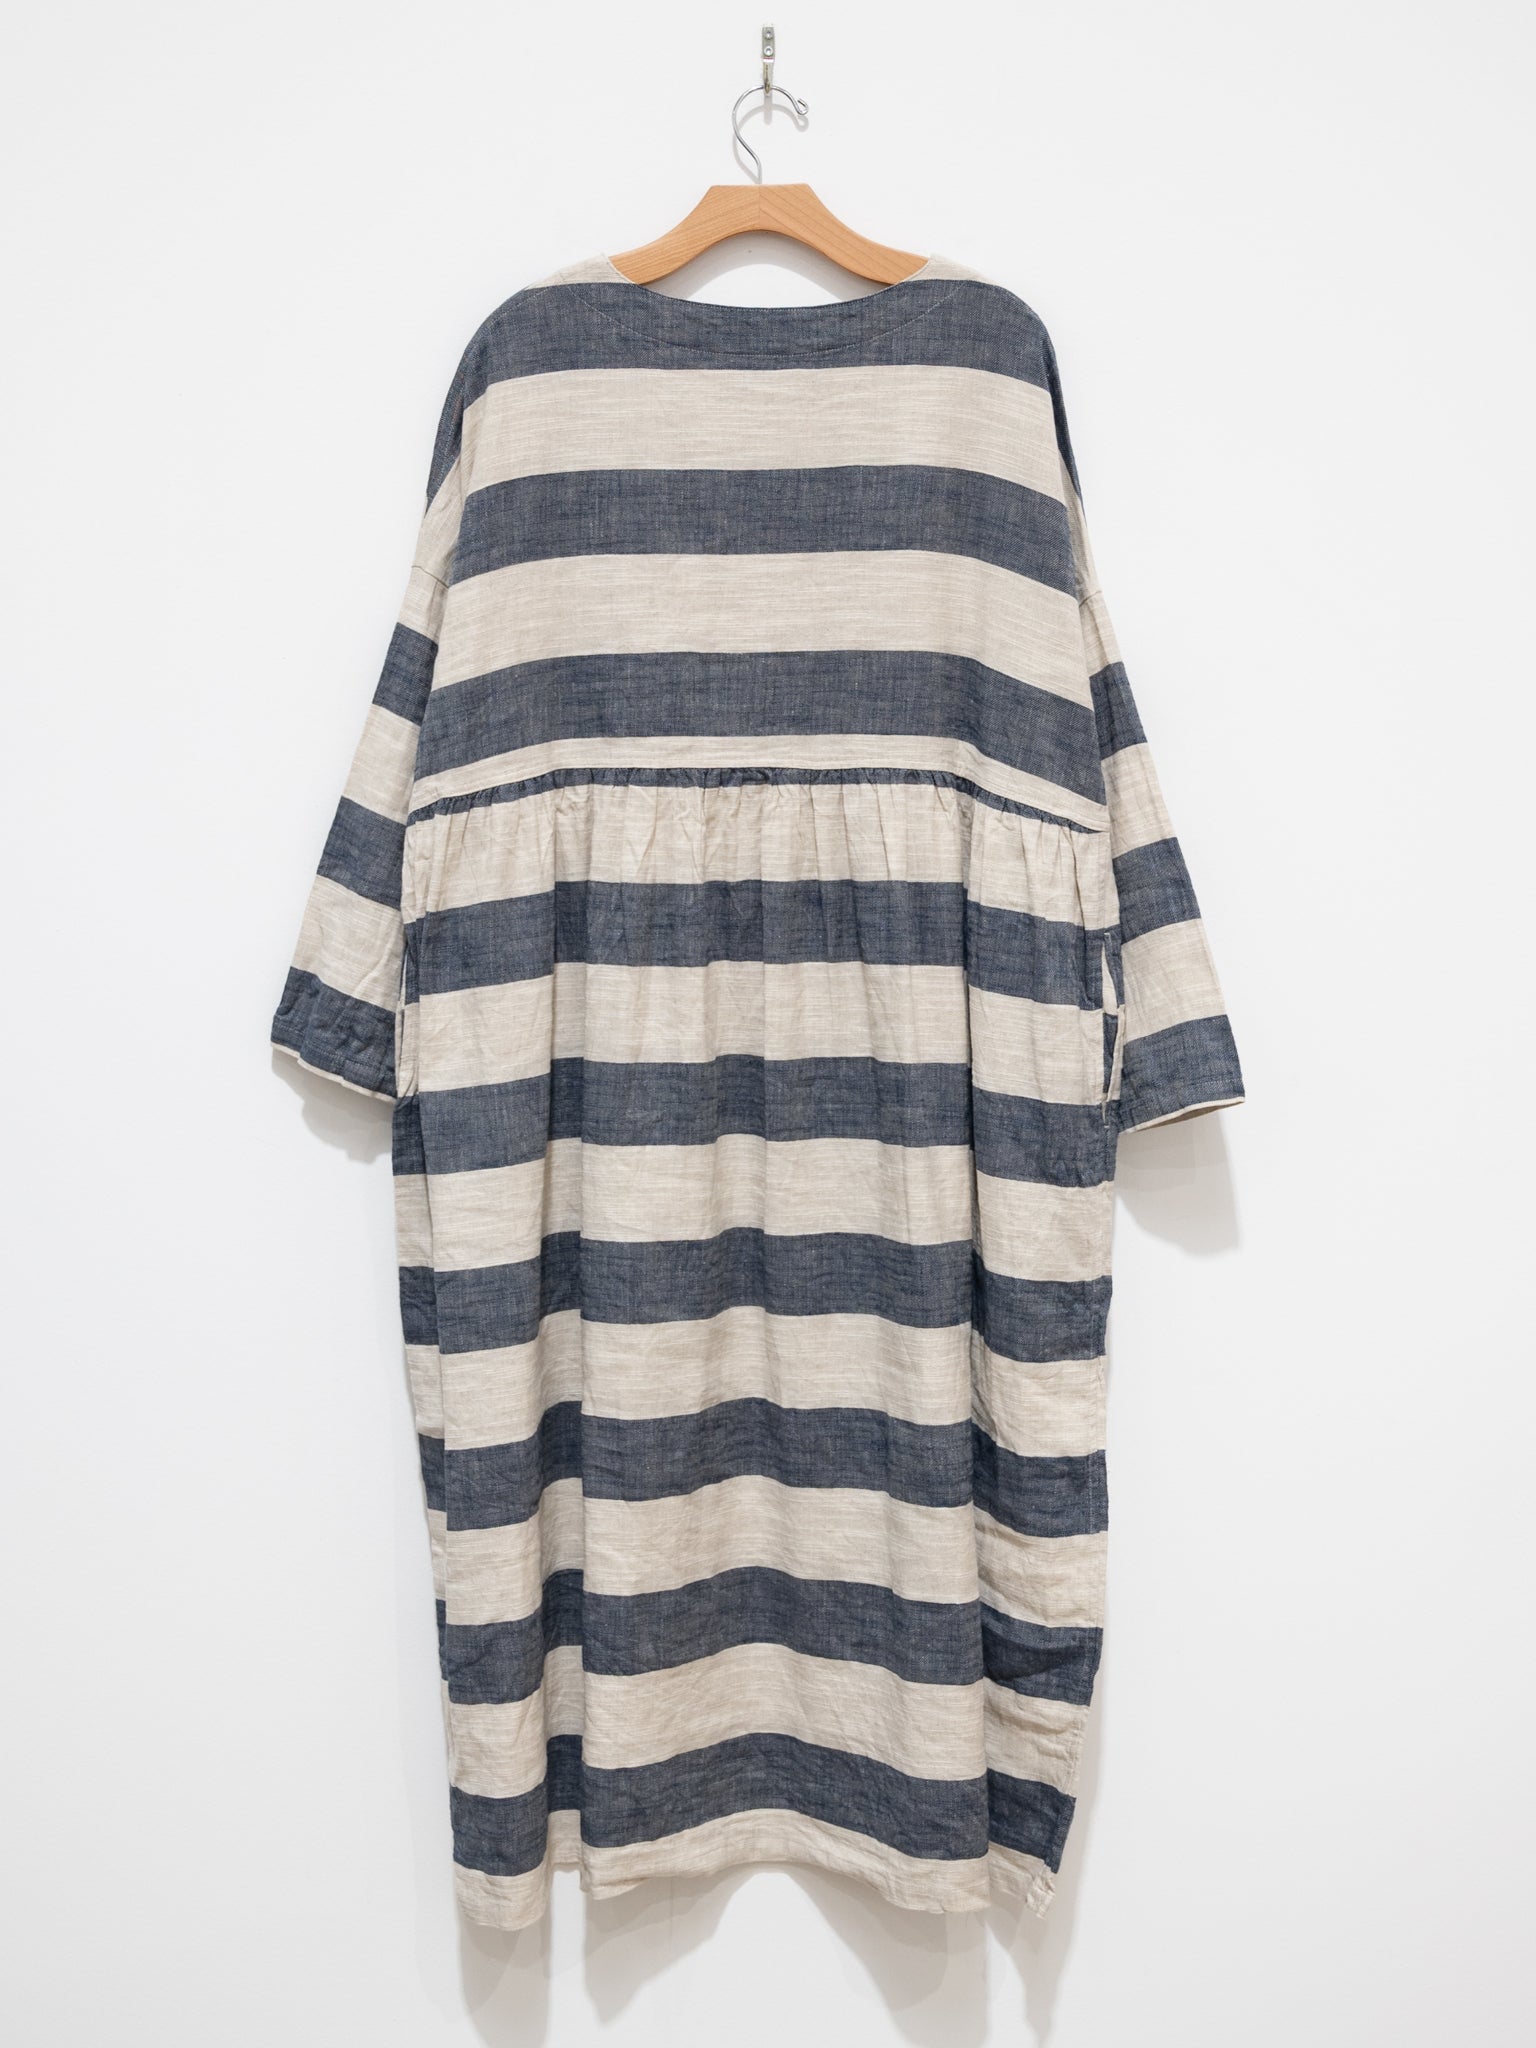 Namu Shop - Ichi Antiquites Linen Cotton Slub Stripes Dress - Navy